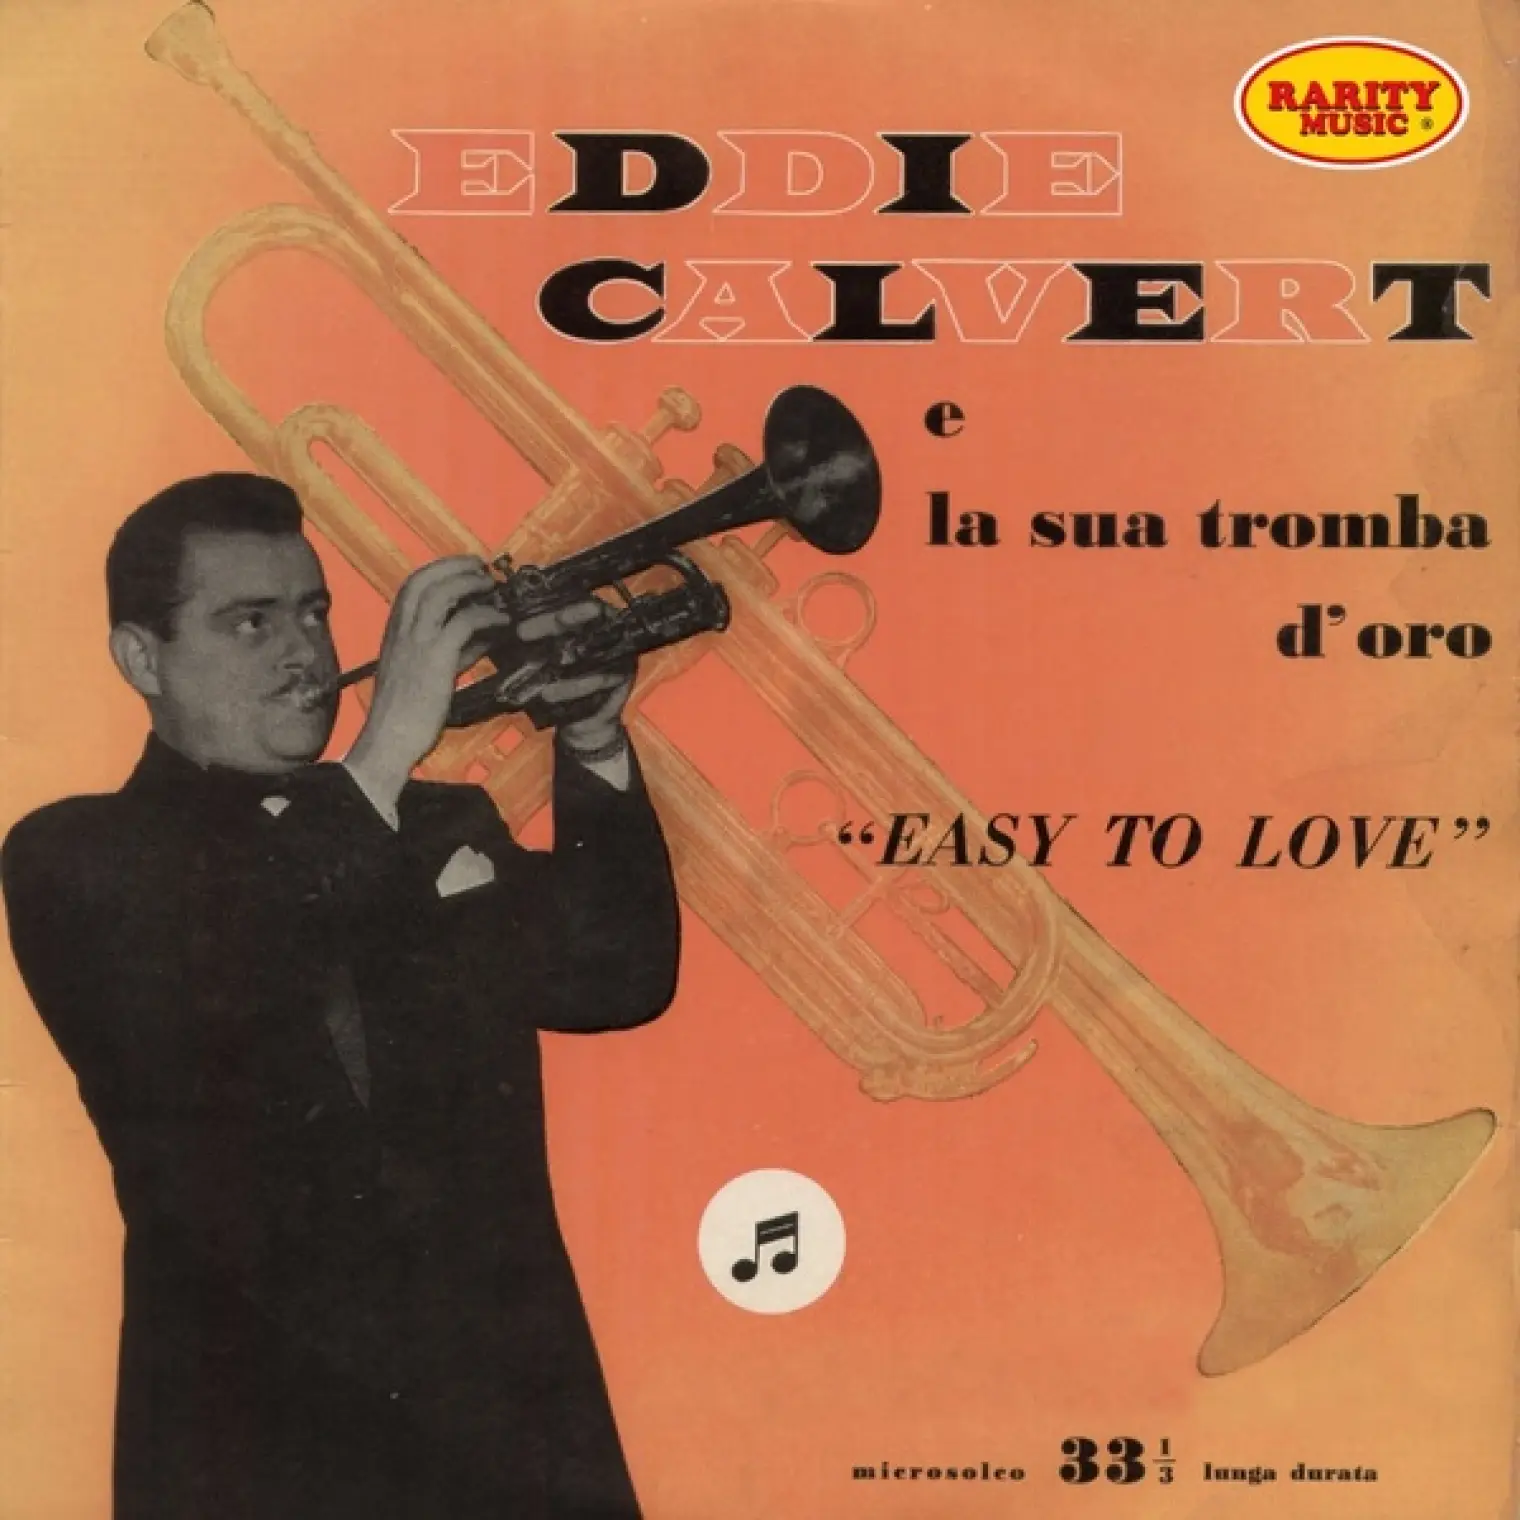 Easy to Love: Rarity Music Pop, Vol. 194 -  Eddie Calvert 